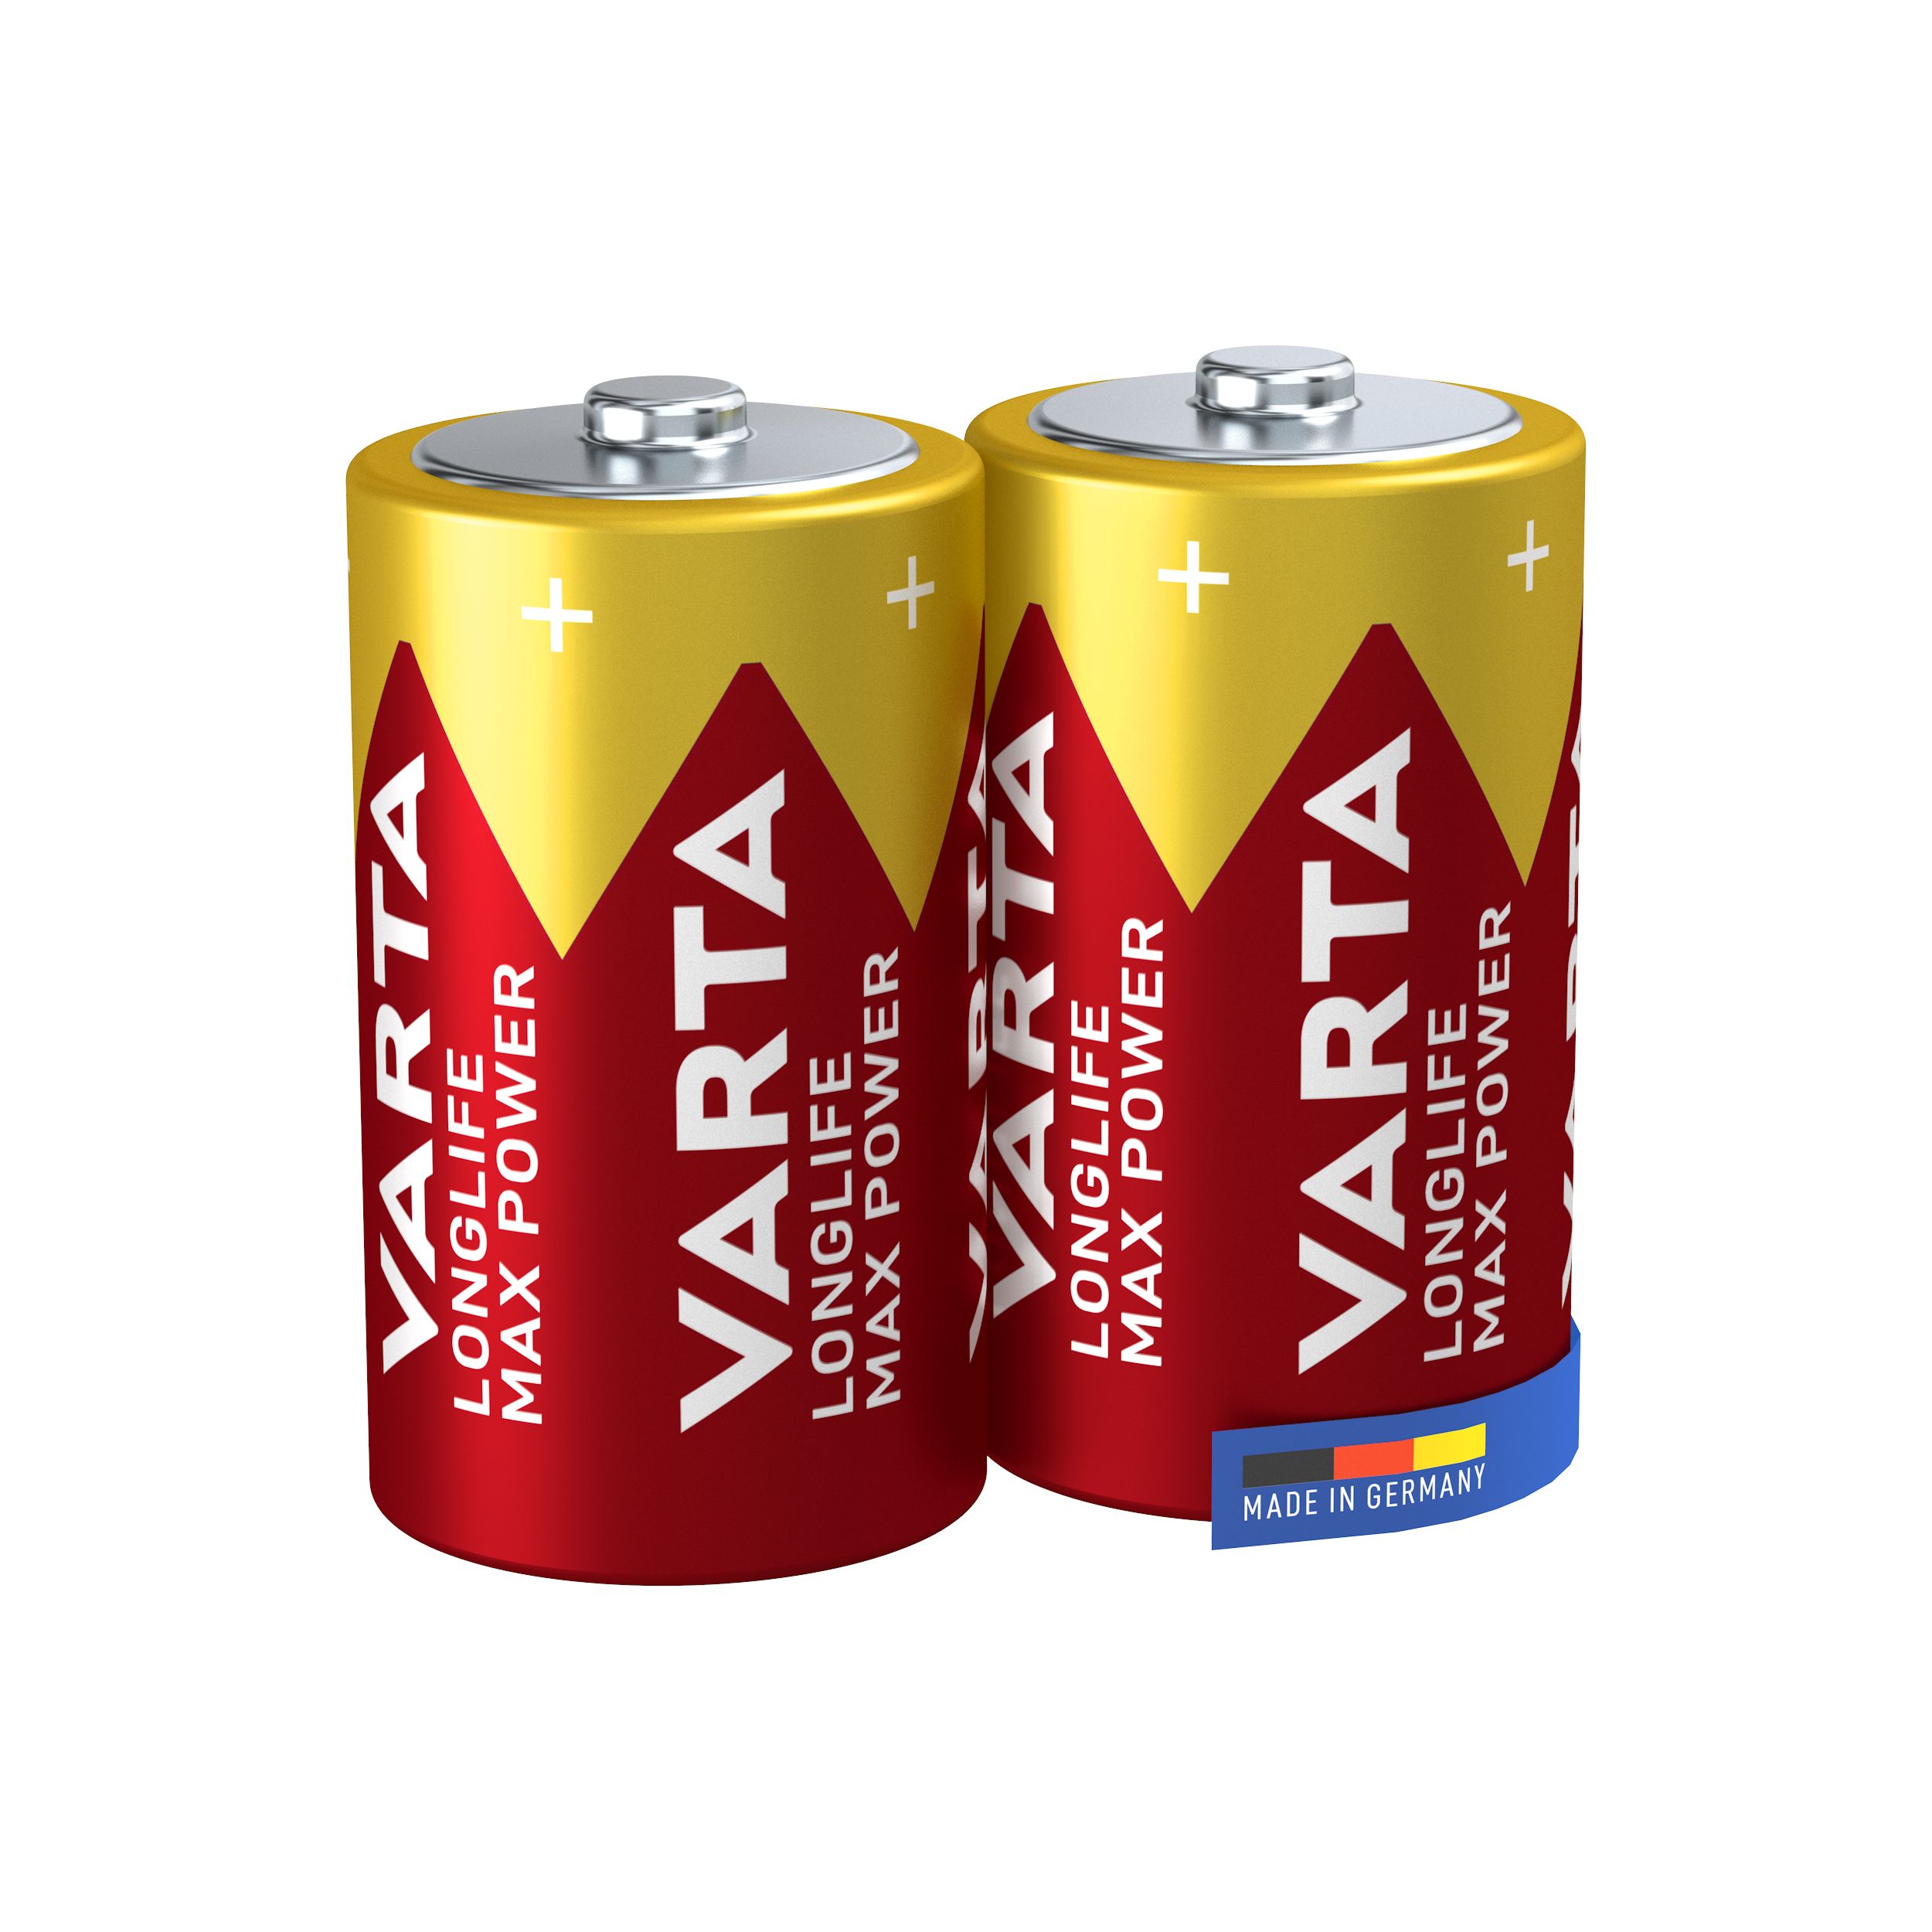 Varta Longlife Max Power 1.5V D Battery, Pack of 2